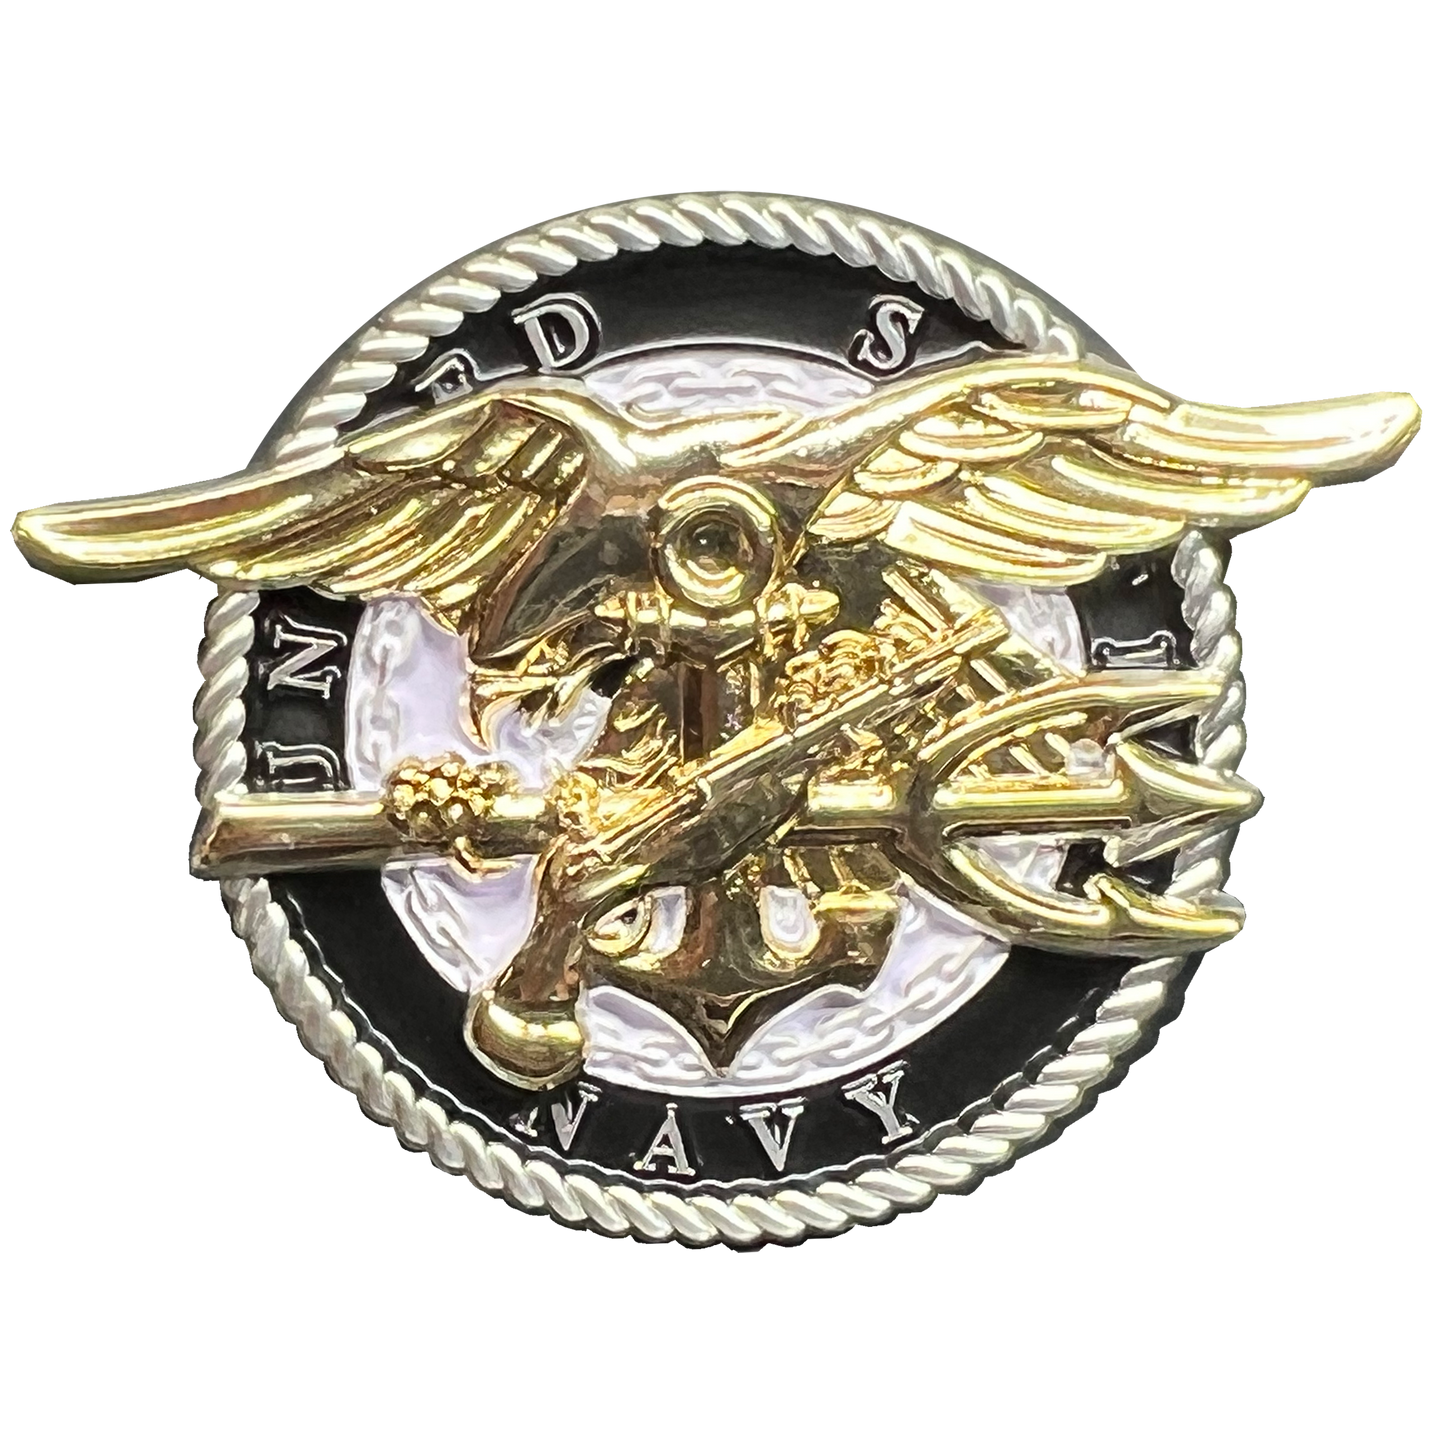 GL2-010 United States Navy Seals Trident Seal Team 6 USN Challenge Coin